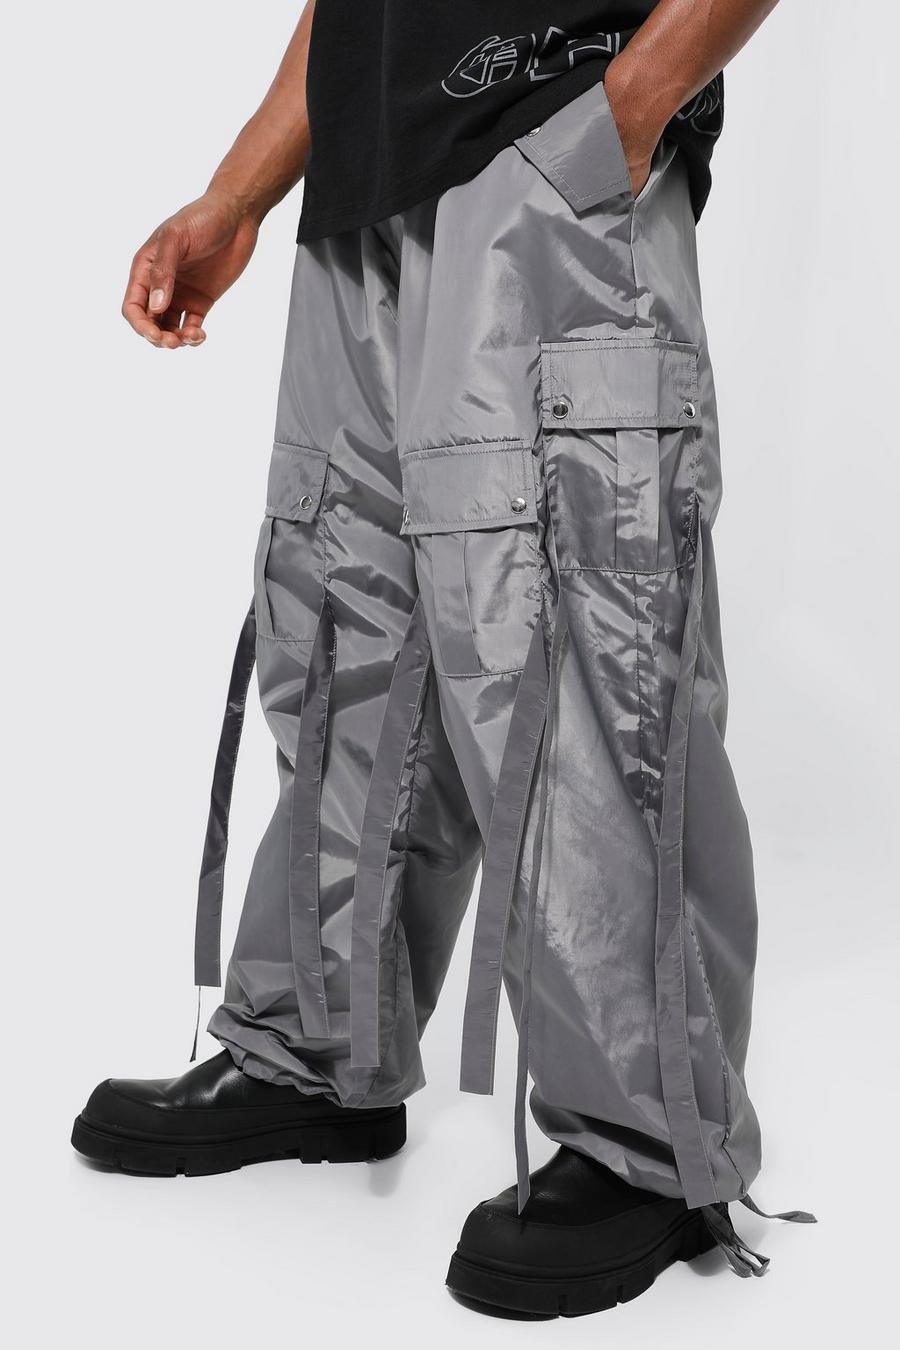 https://media.boohoo.com/i/boohoo/bmm36136_charcoal_xl/male-charcoal-elastic-waist-parachute-cargo-strap-trouser/?w=900&qlt=default&fmt.jp2.qlt=70&fmt=auto&sm=fit